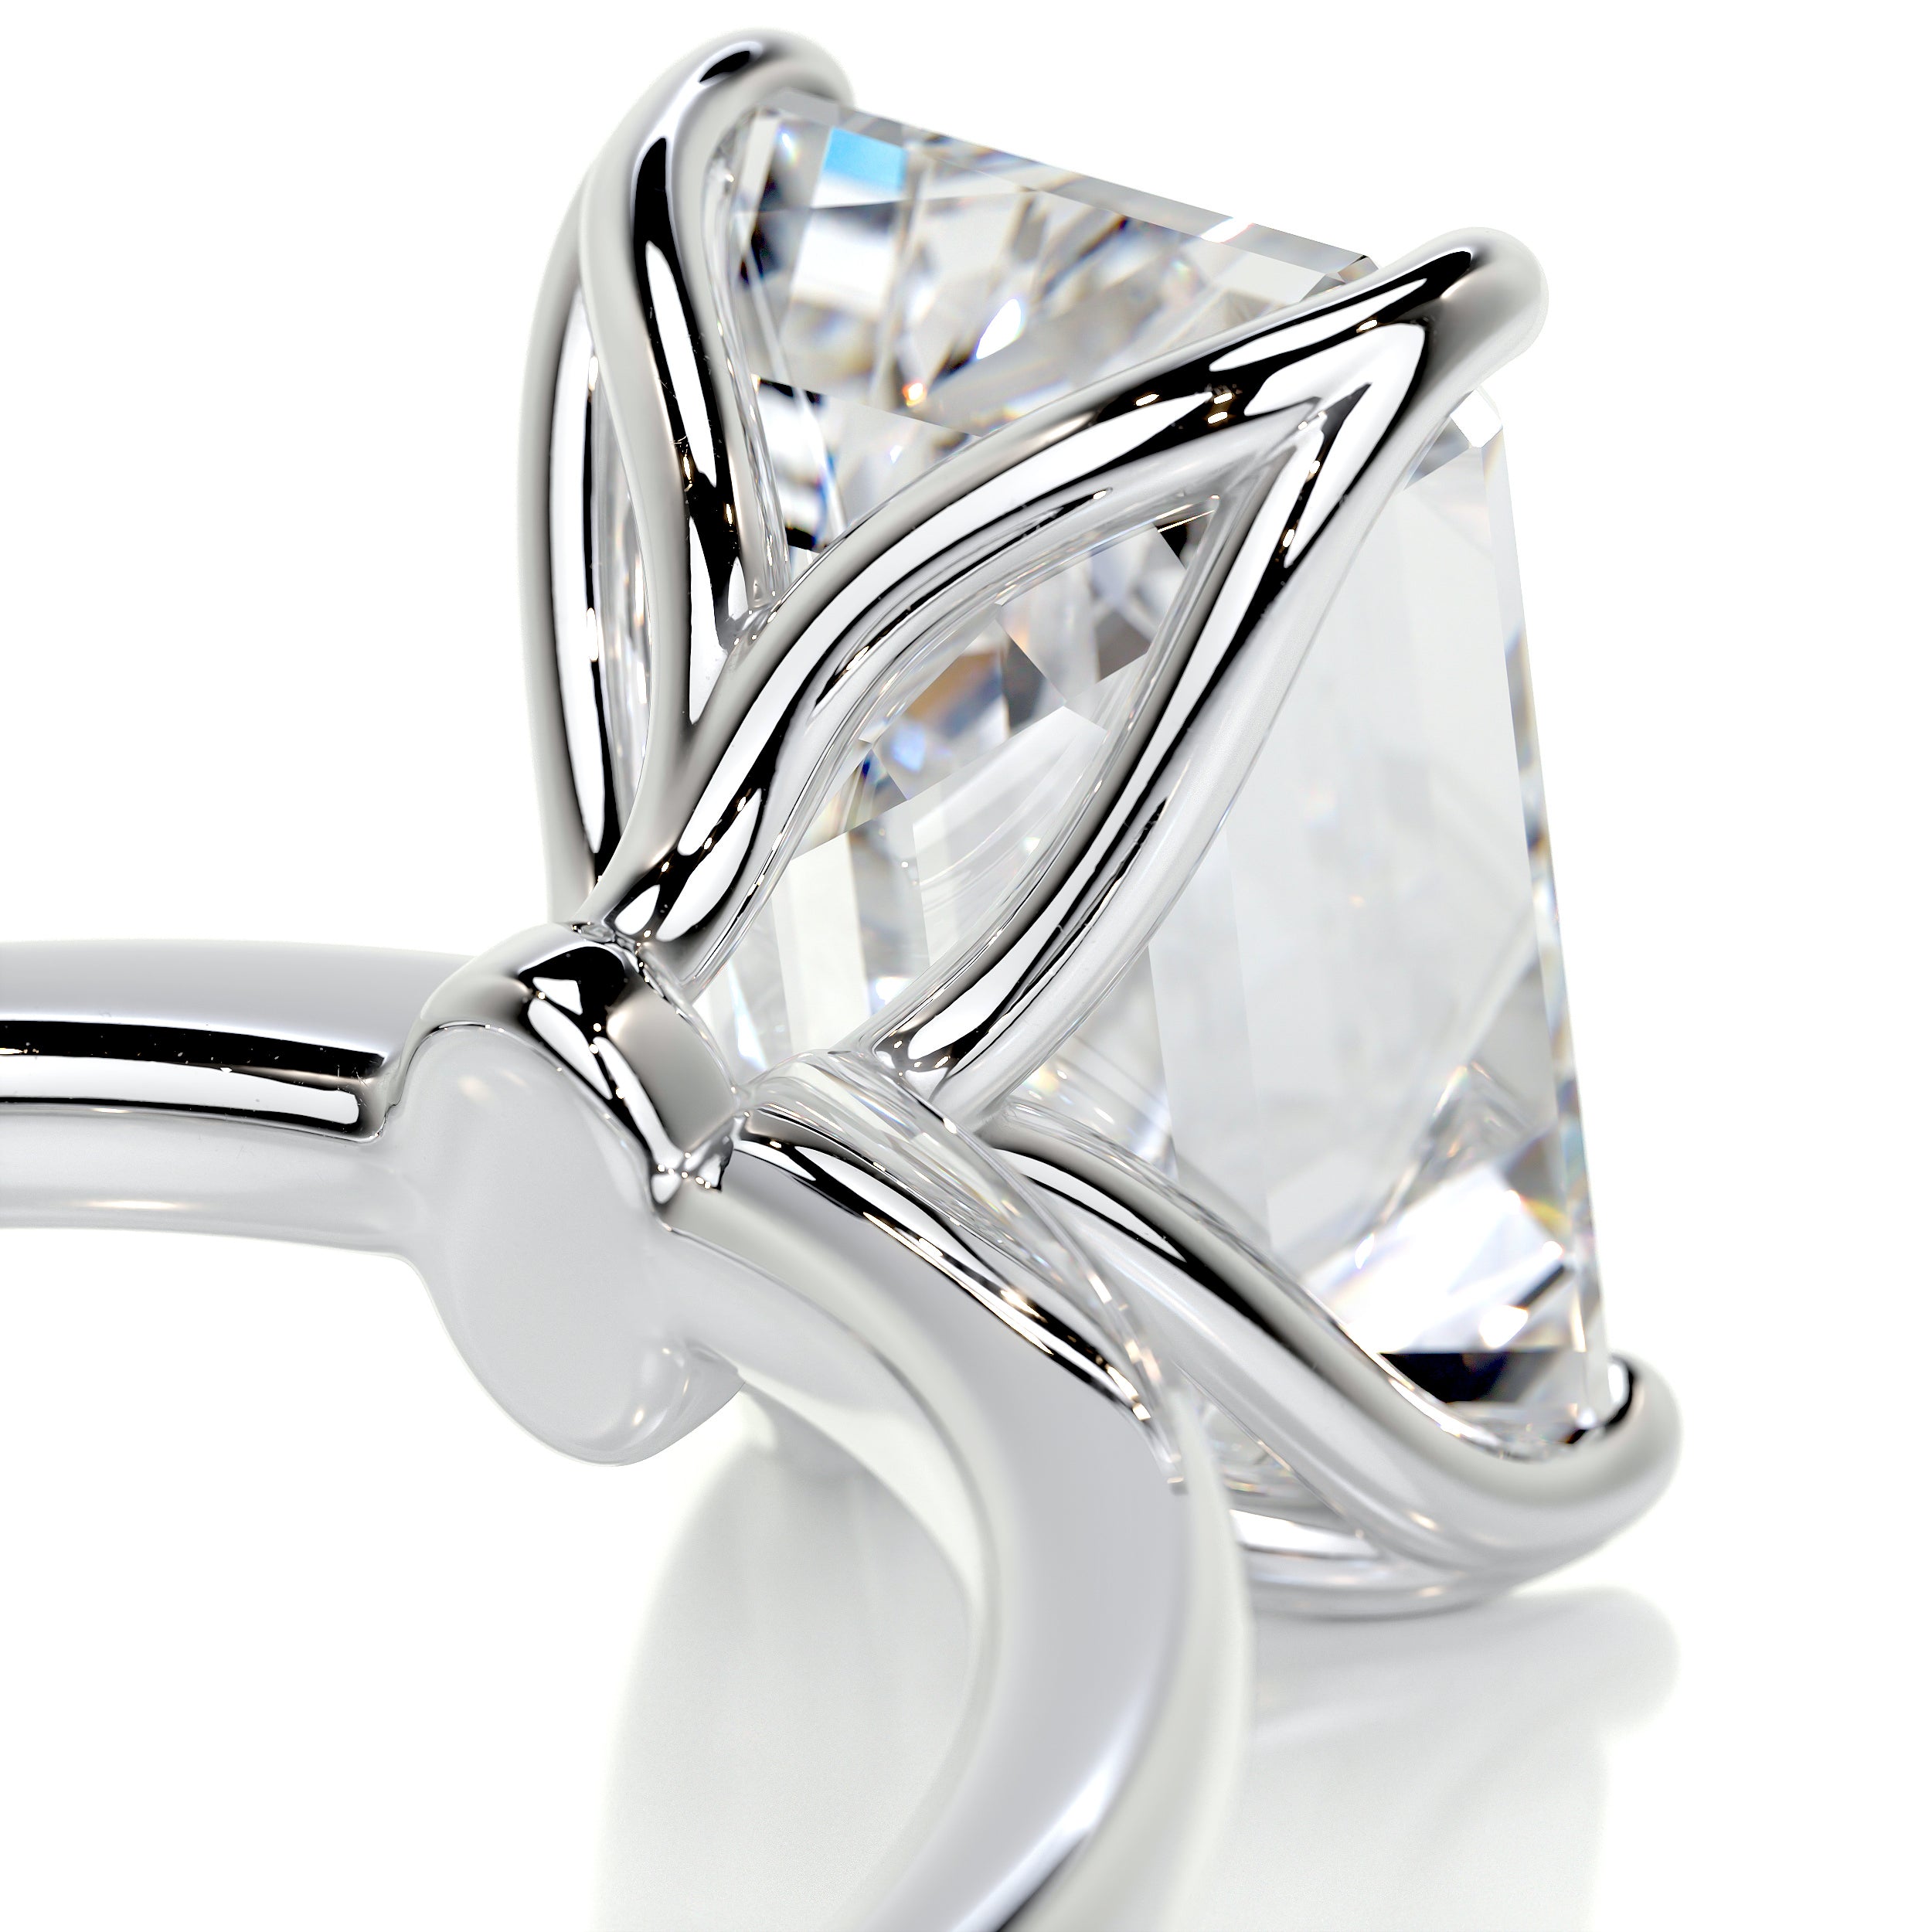 Phoenix Diamond Engagement Ring   (3 Carat) -14K White Gold